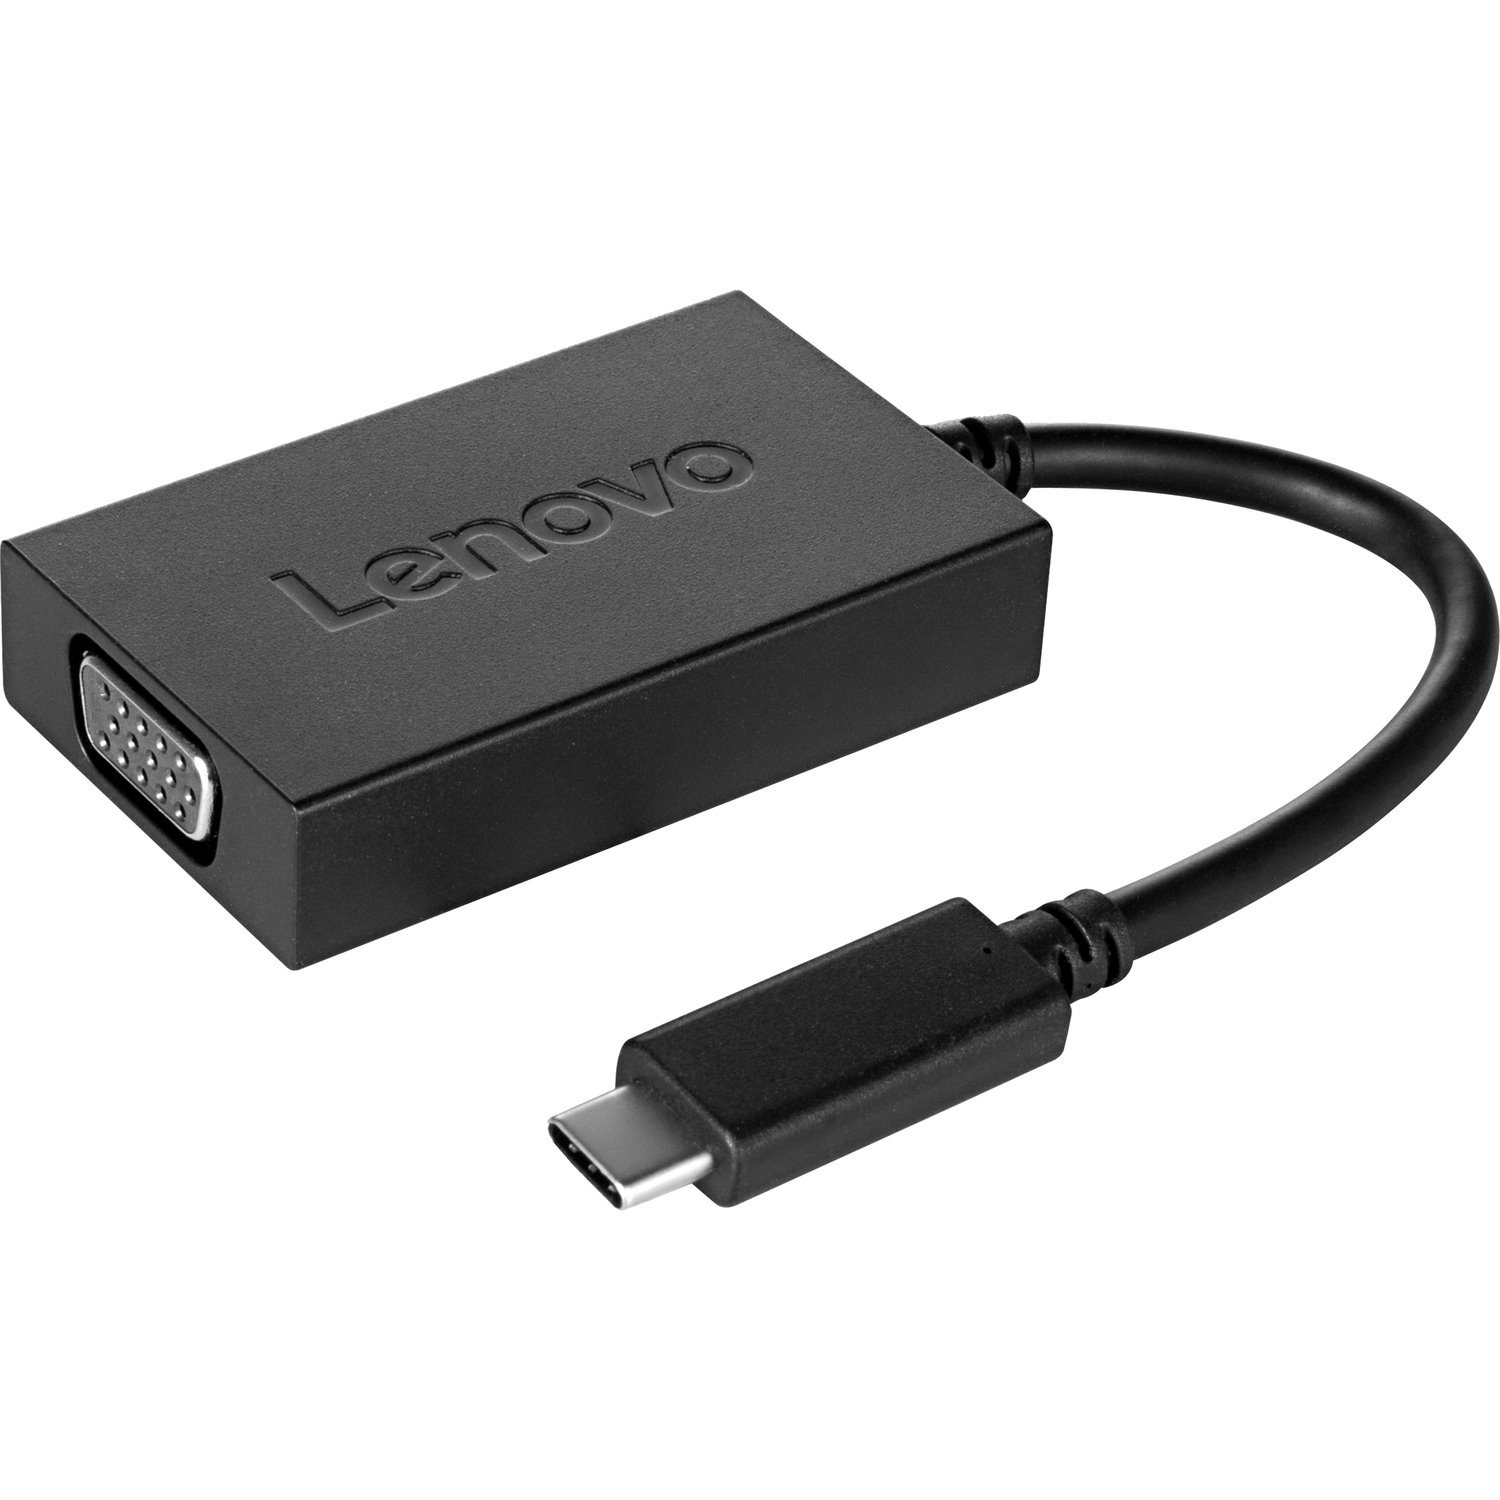 Lenovo USB-C to VGA Plus Power Adapter